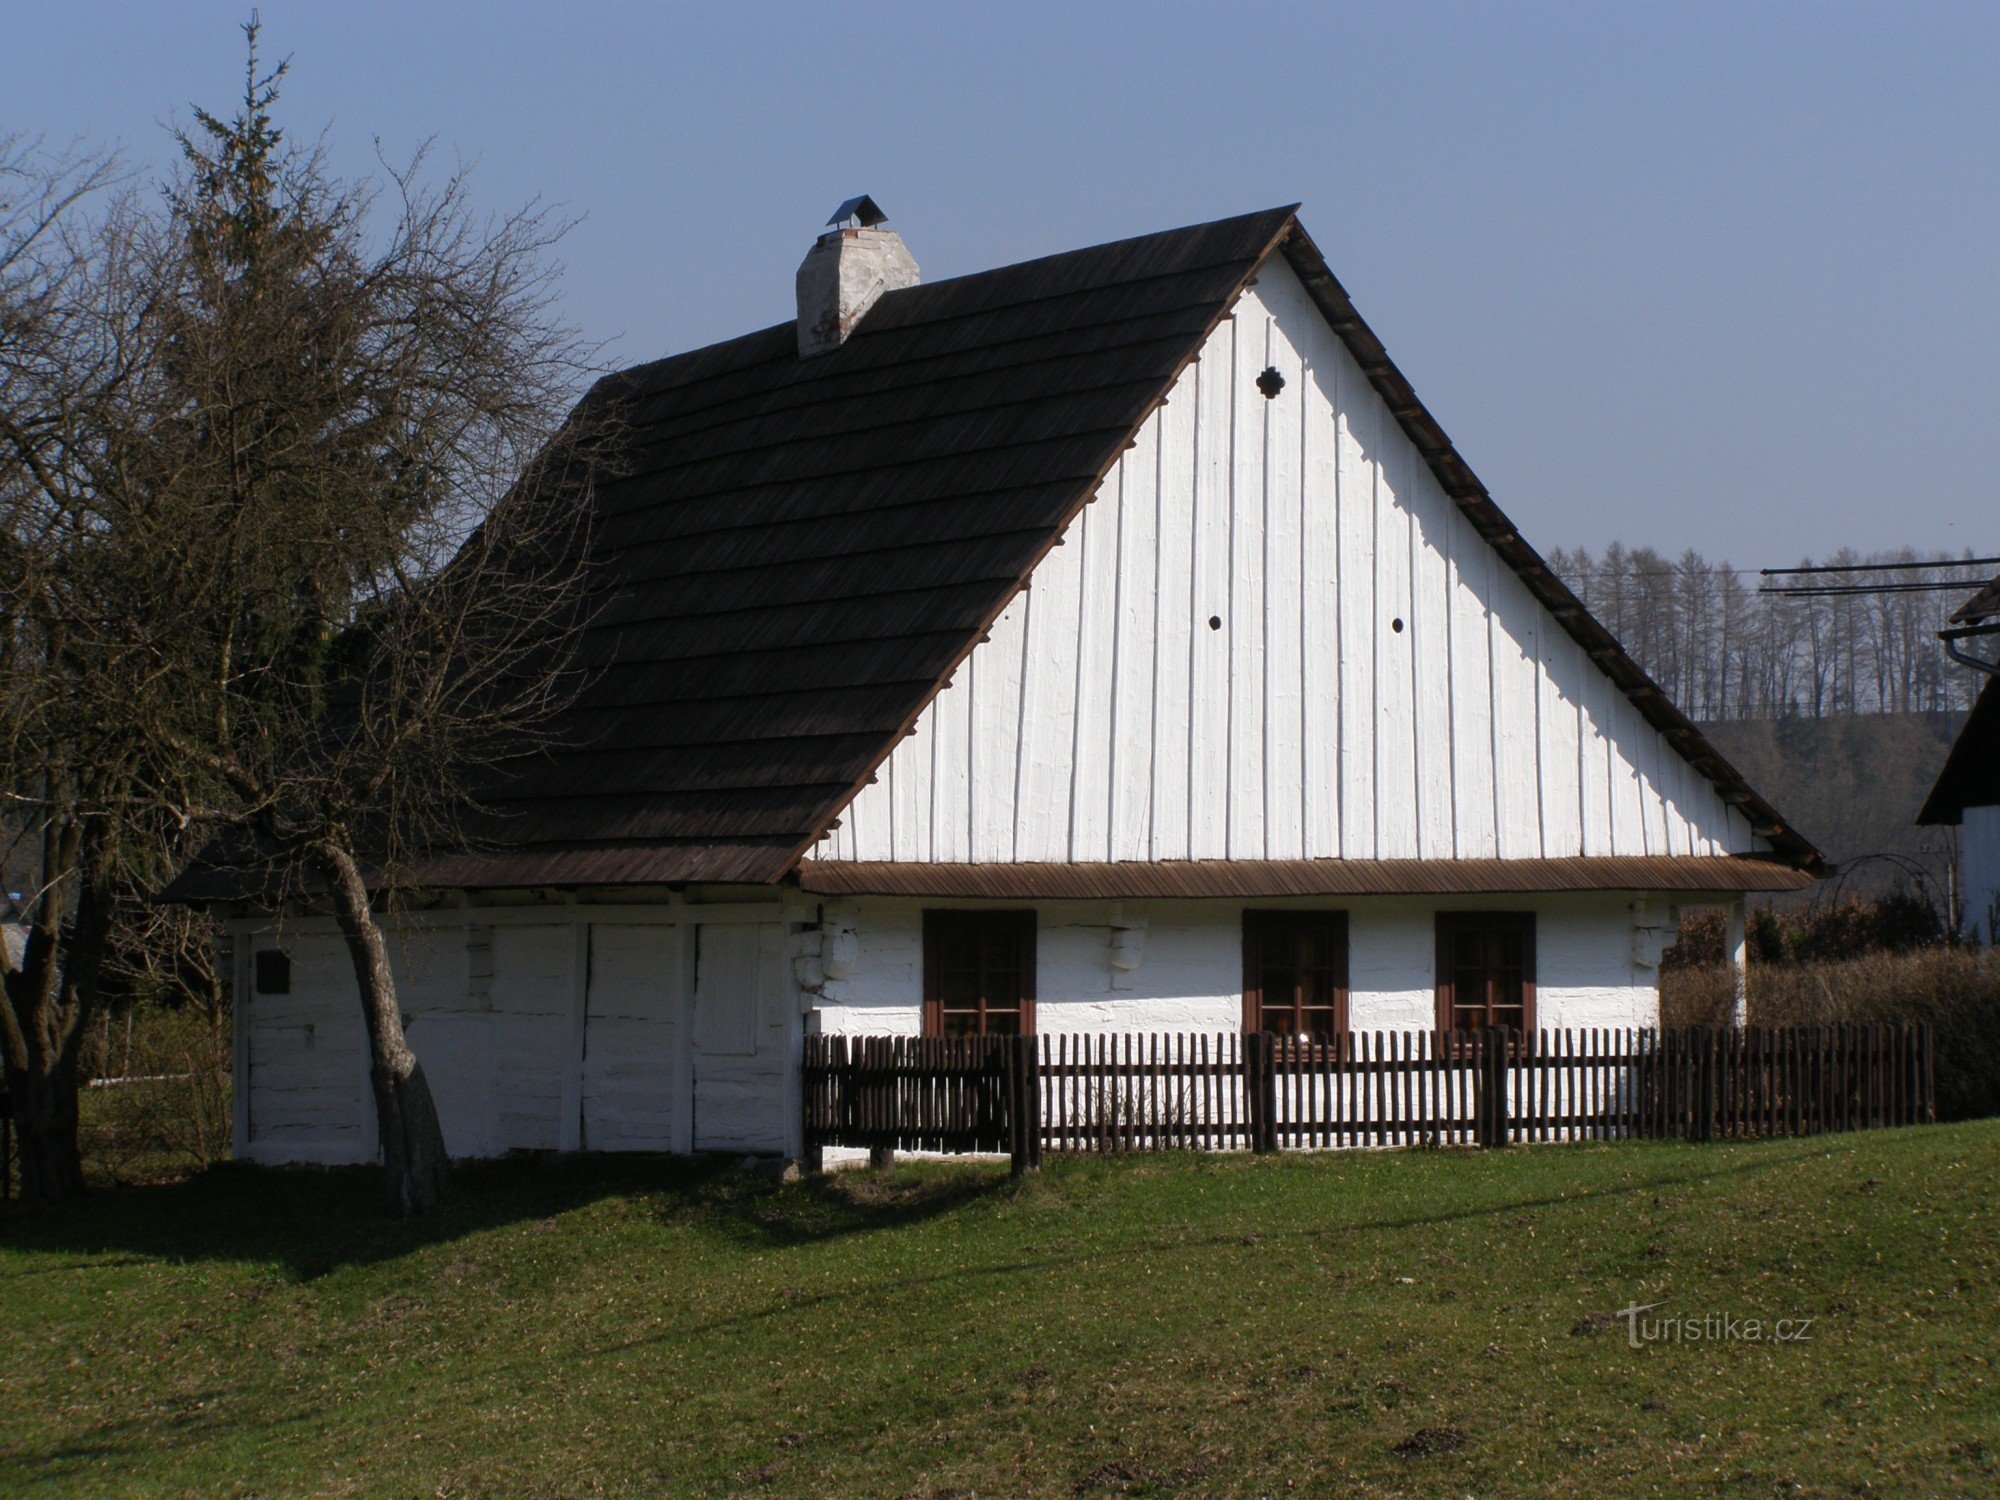 Žamberk (Helvíkovice) - birthplace of Prokop Diviš